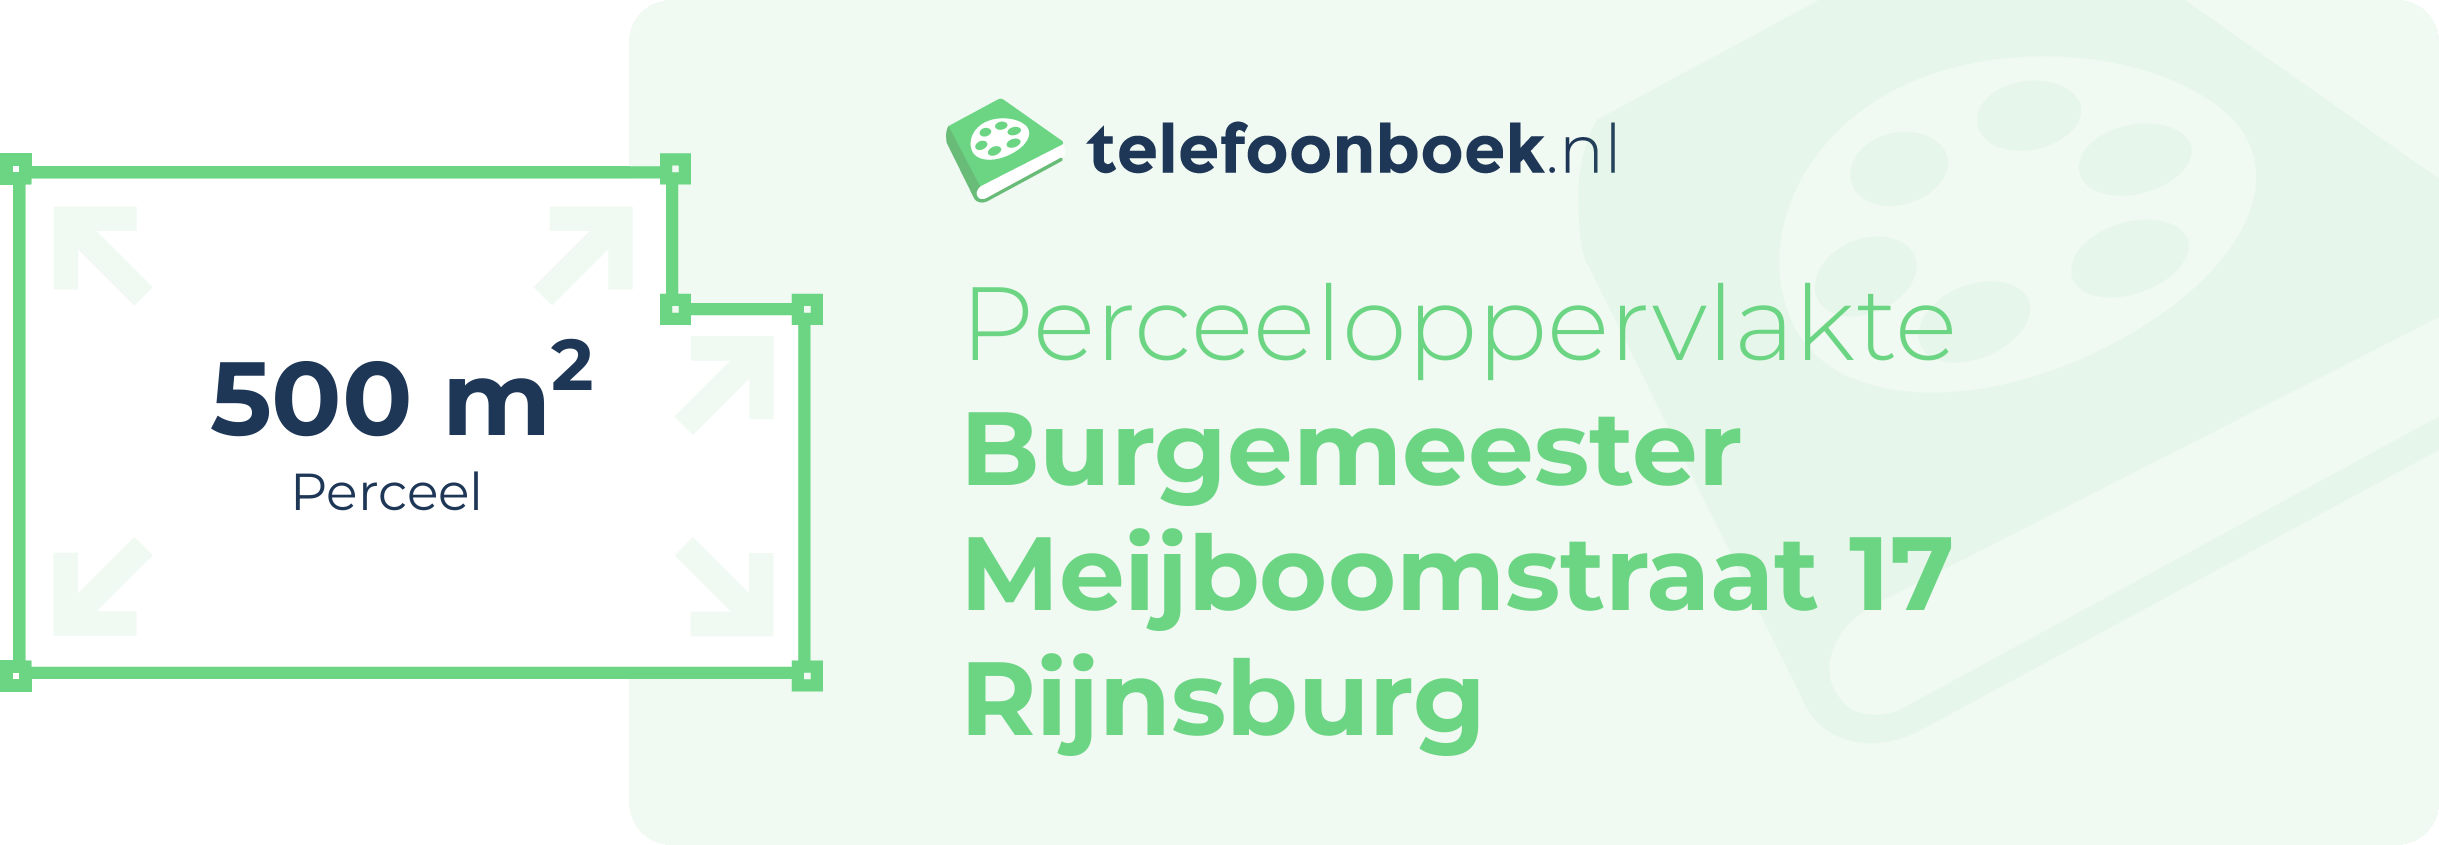 Perceeloppervlakte Burgemeester Meijboomstraat 17 Rijnsburg